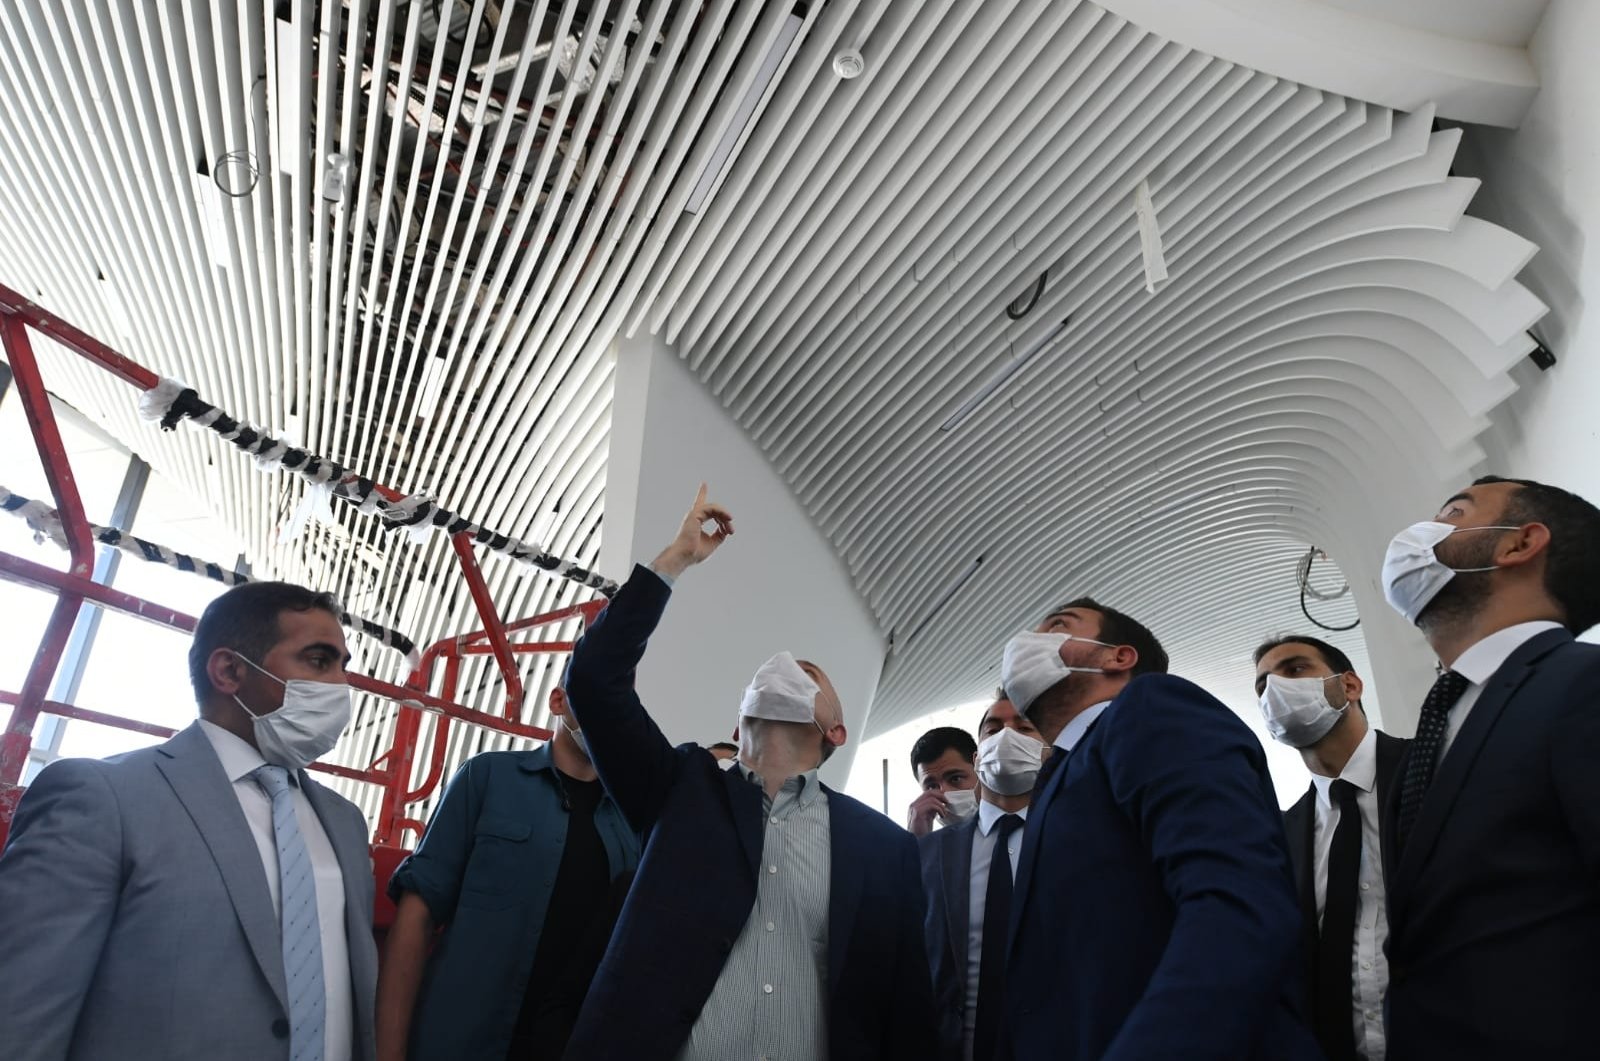 Transport and Infrastructure Minister Adil Karaismailoğlu (C) inspects the Çamlıca Tower on site in Istanbul's Üsküdar district, Turkey, Aug. 23, 2020. (DHA Photo)